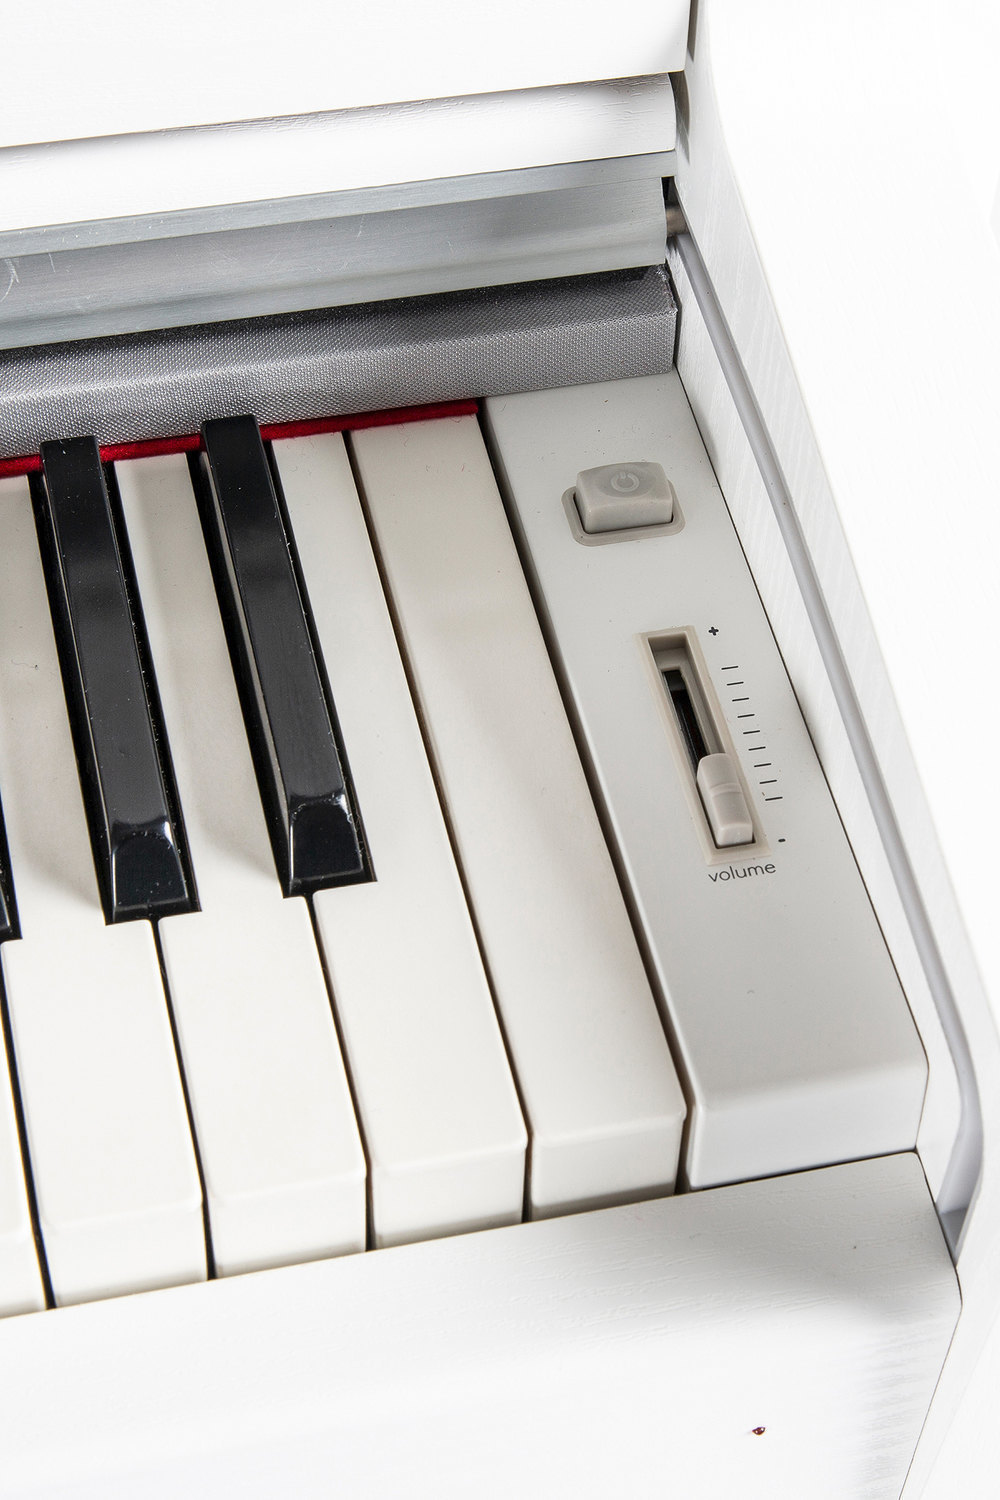 Gewa Up 385 G Blanc - Digital piano with stand - Variation 3